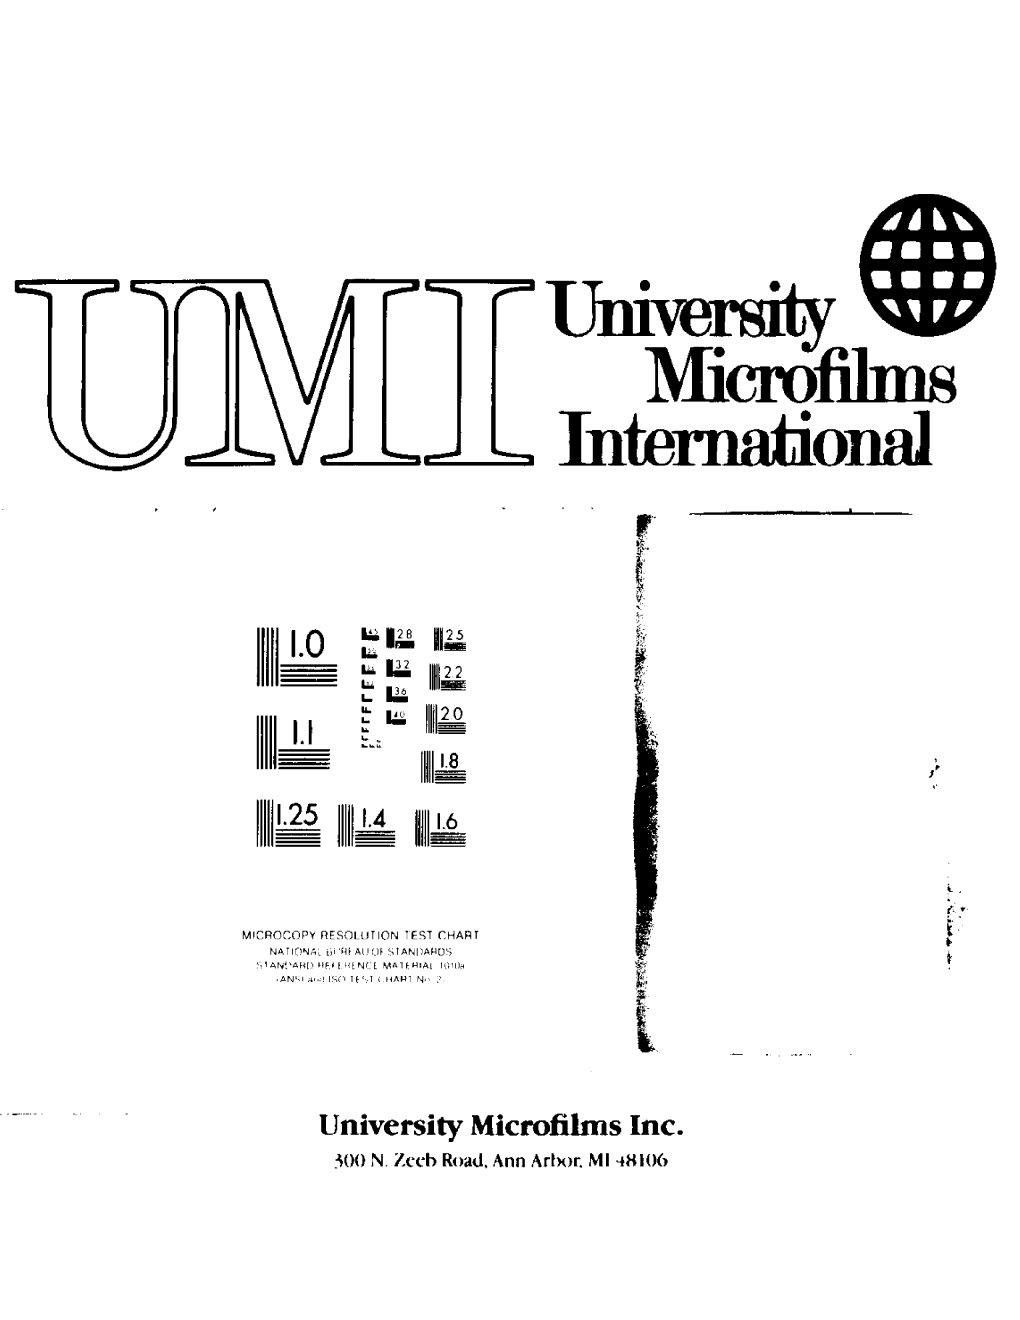 University Microfilms Litemationa]